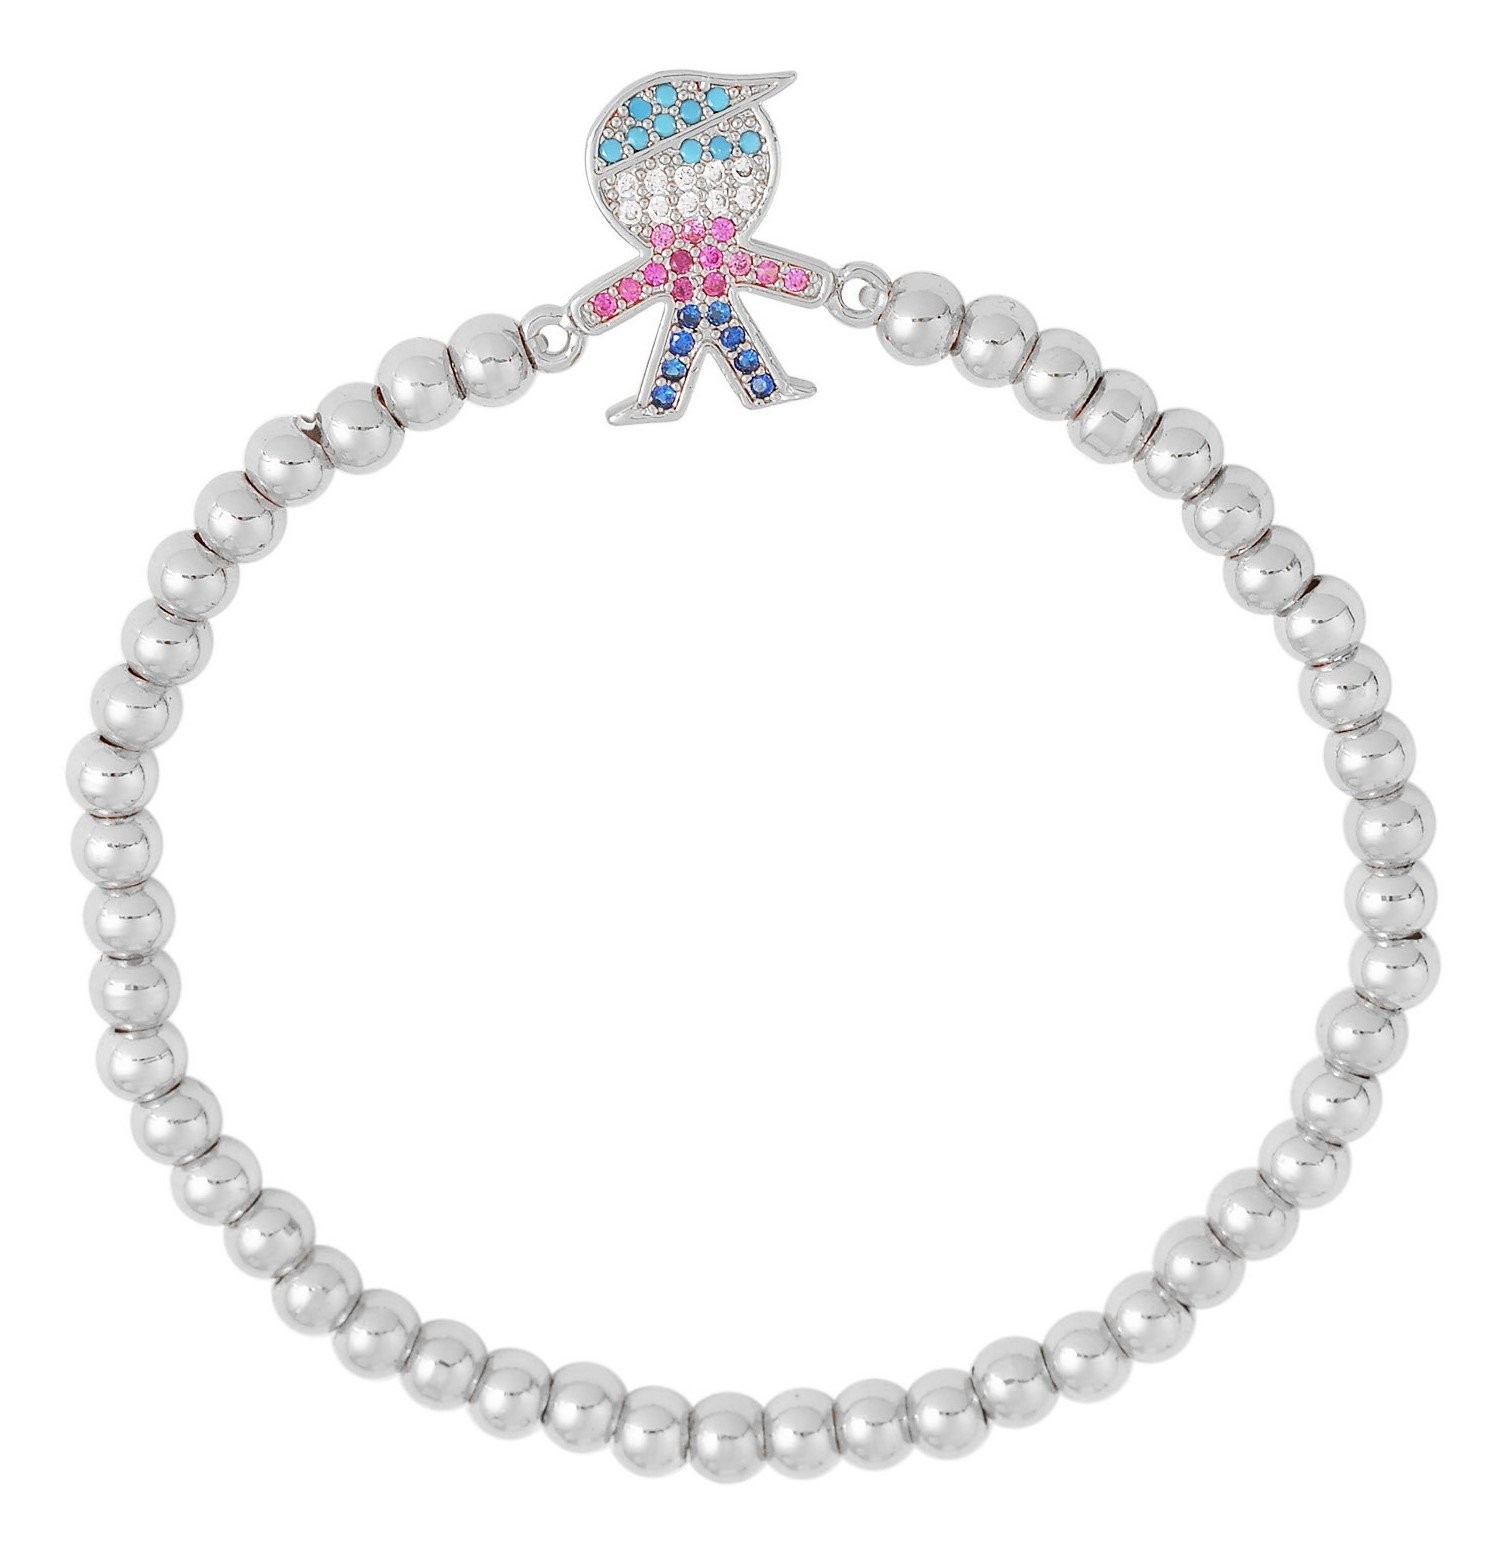 Stainless Steel Silver Tone Boy CZ Beads Bracelet